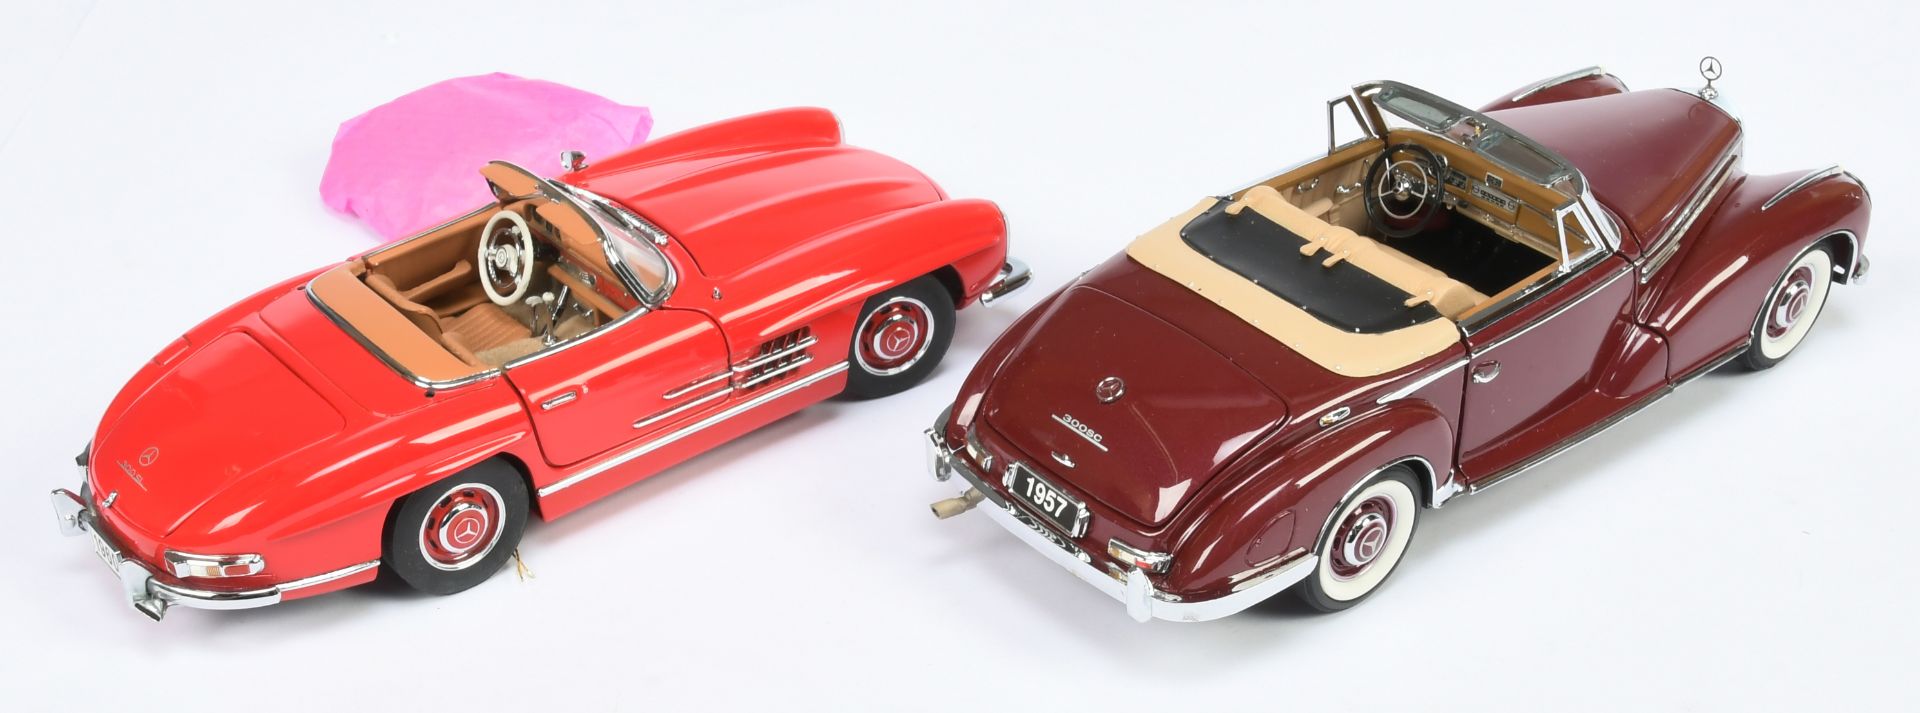 Franklin Mint 1/24th scale pair (1) B11UG29 1957 Mercedes 300 SC, (2) B11XA16 1960 Mercedes 300 S... - Image 2 of 2